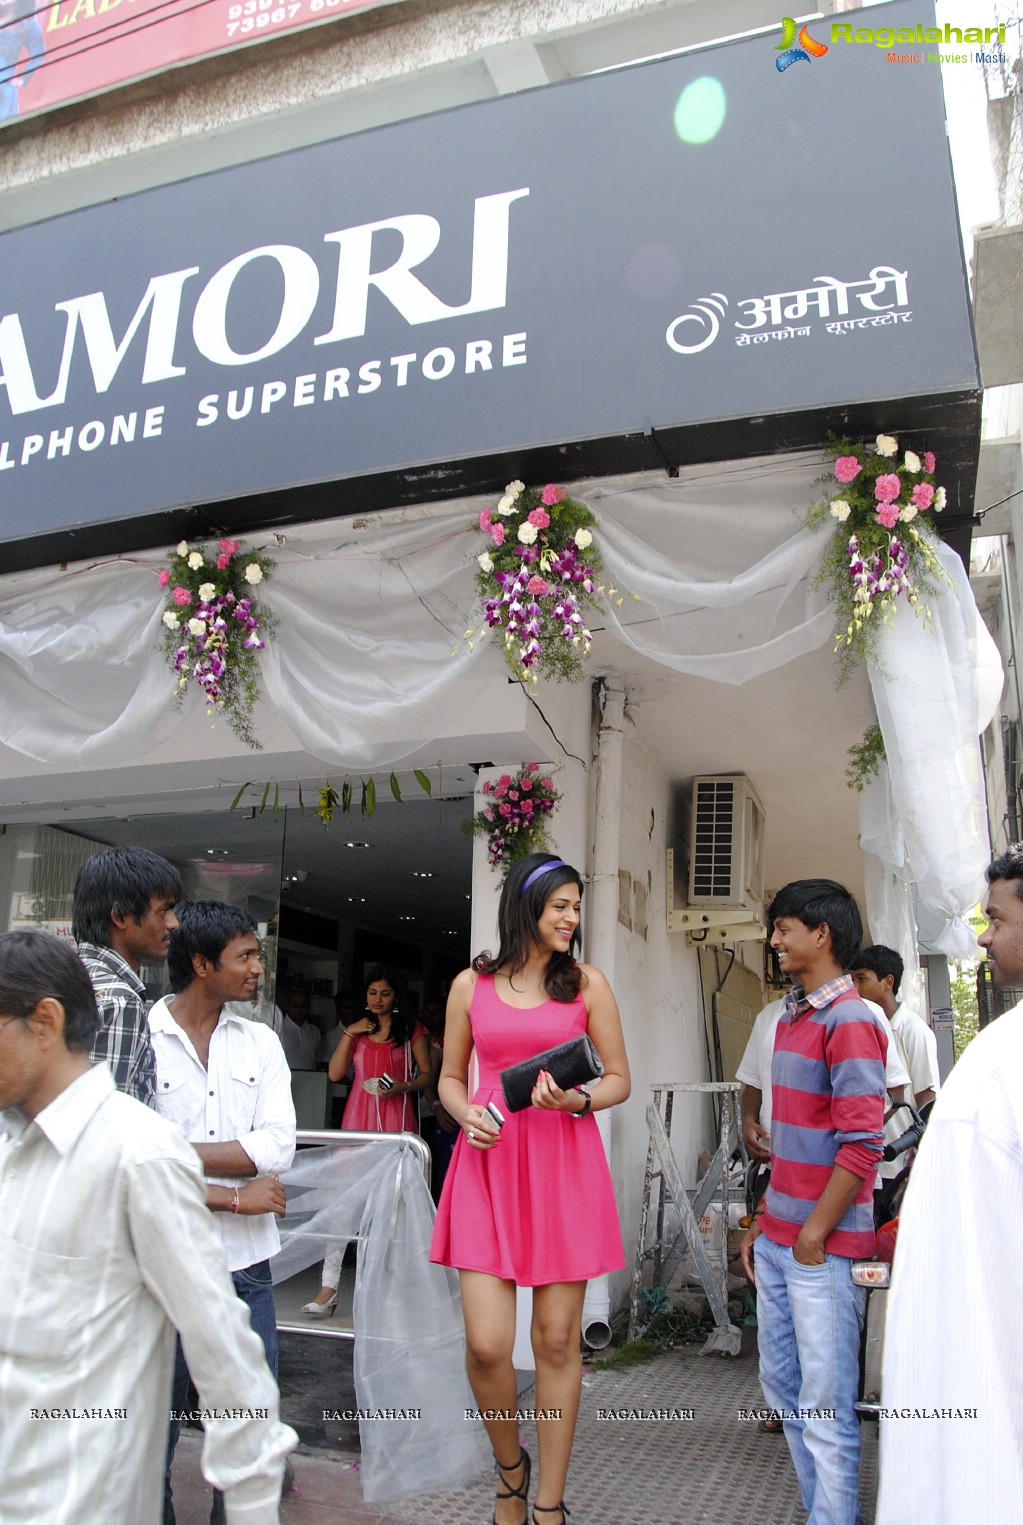 Amori Cellphone Super Store Launch at Madhapur